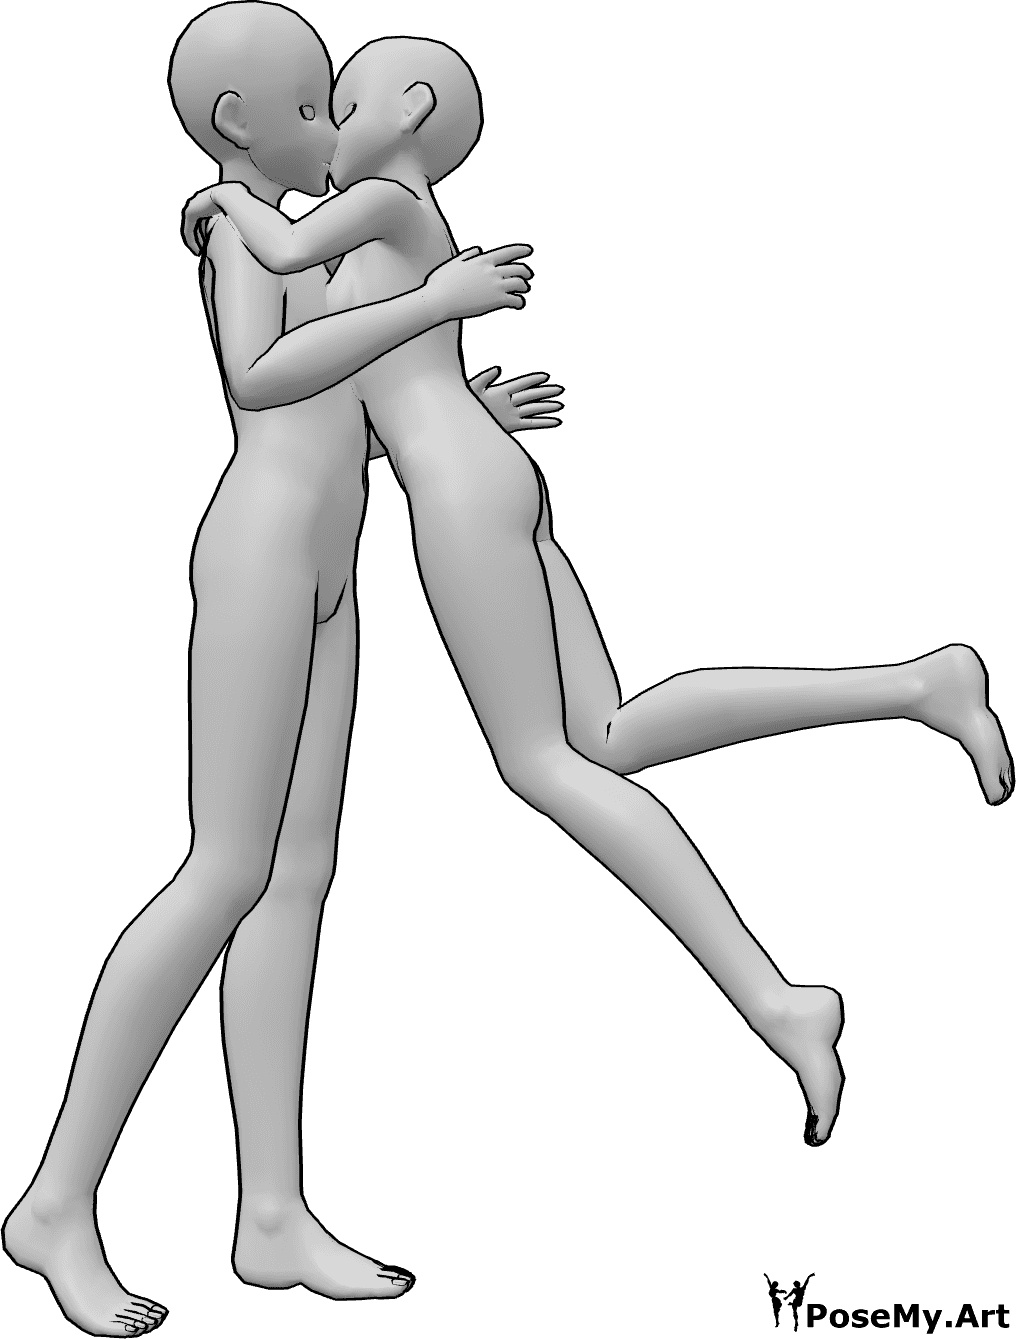 Referencia de poses- Anime beso sorpresa pose - La hembra anime salta y da un abrazo y un beso sorpresa al macho